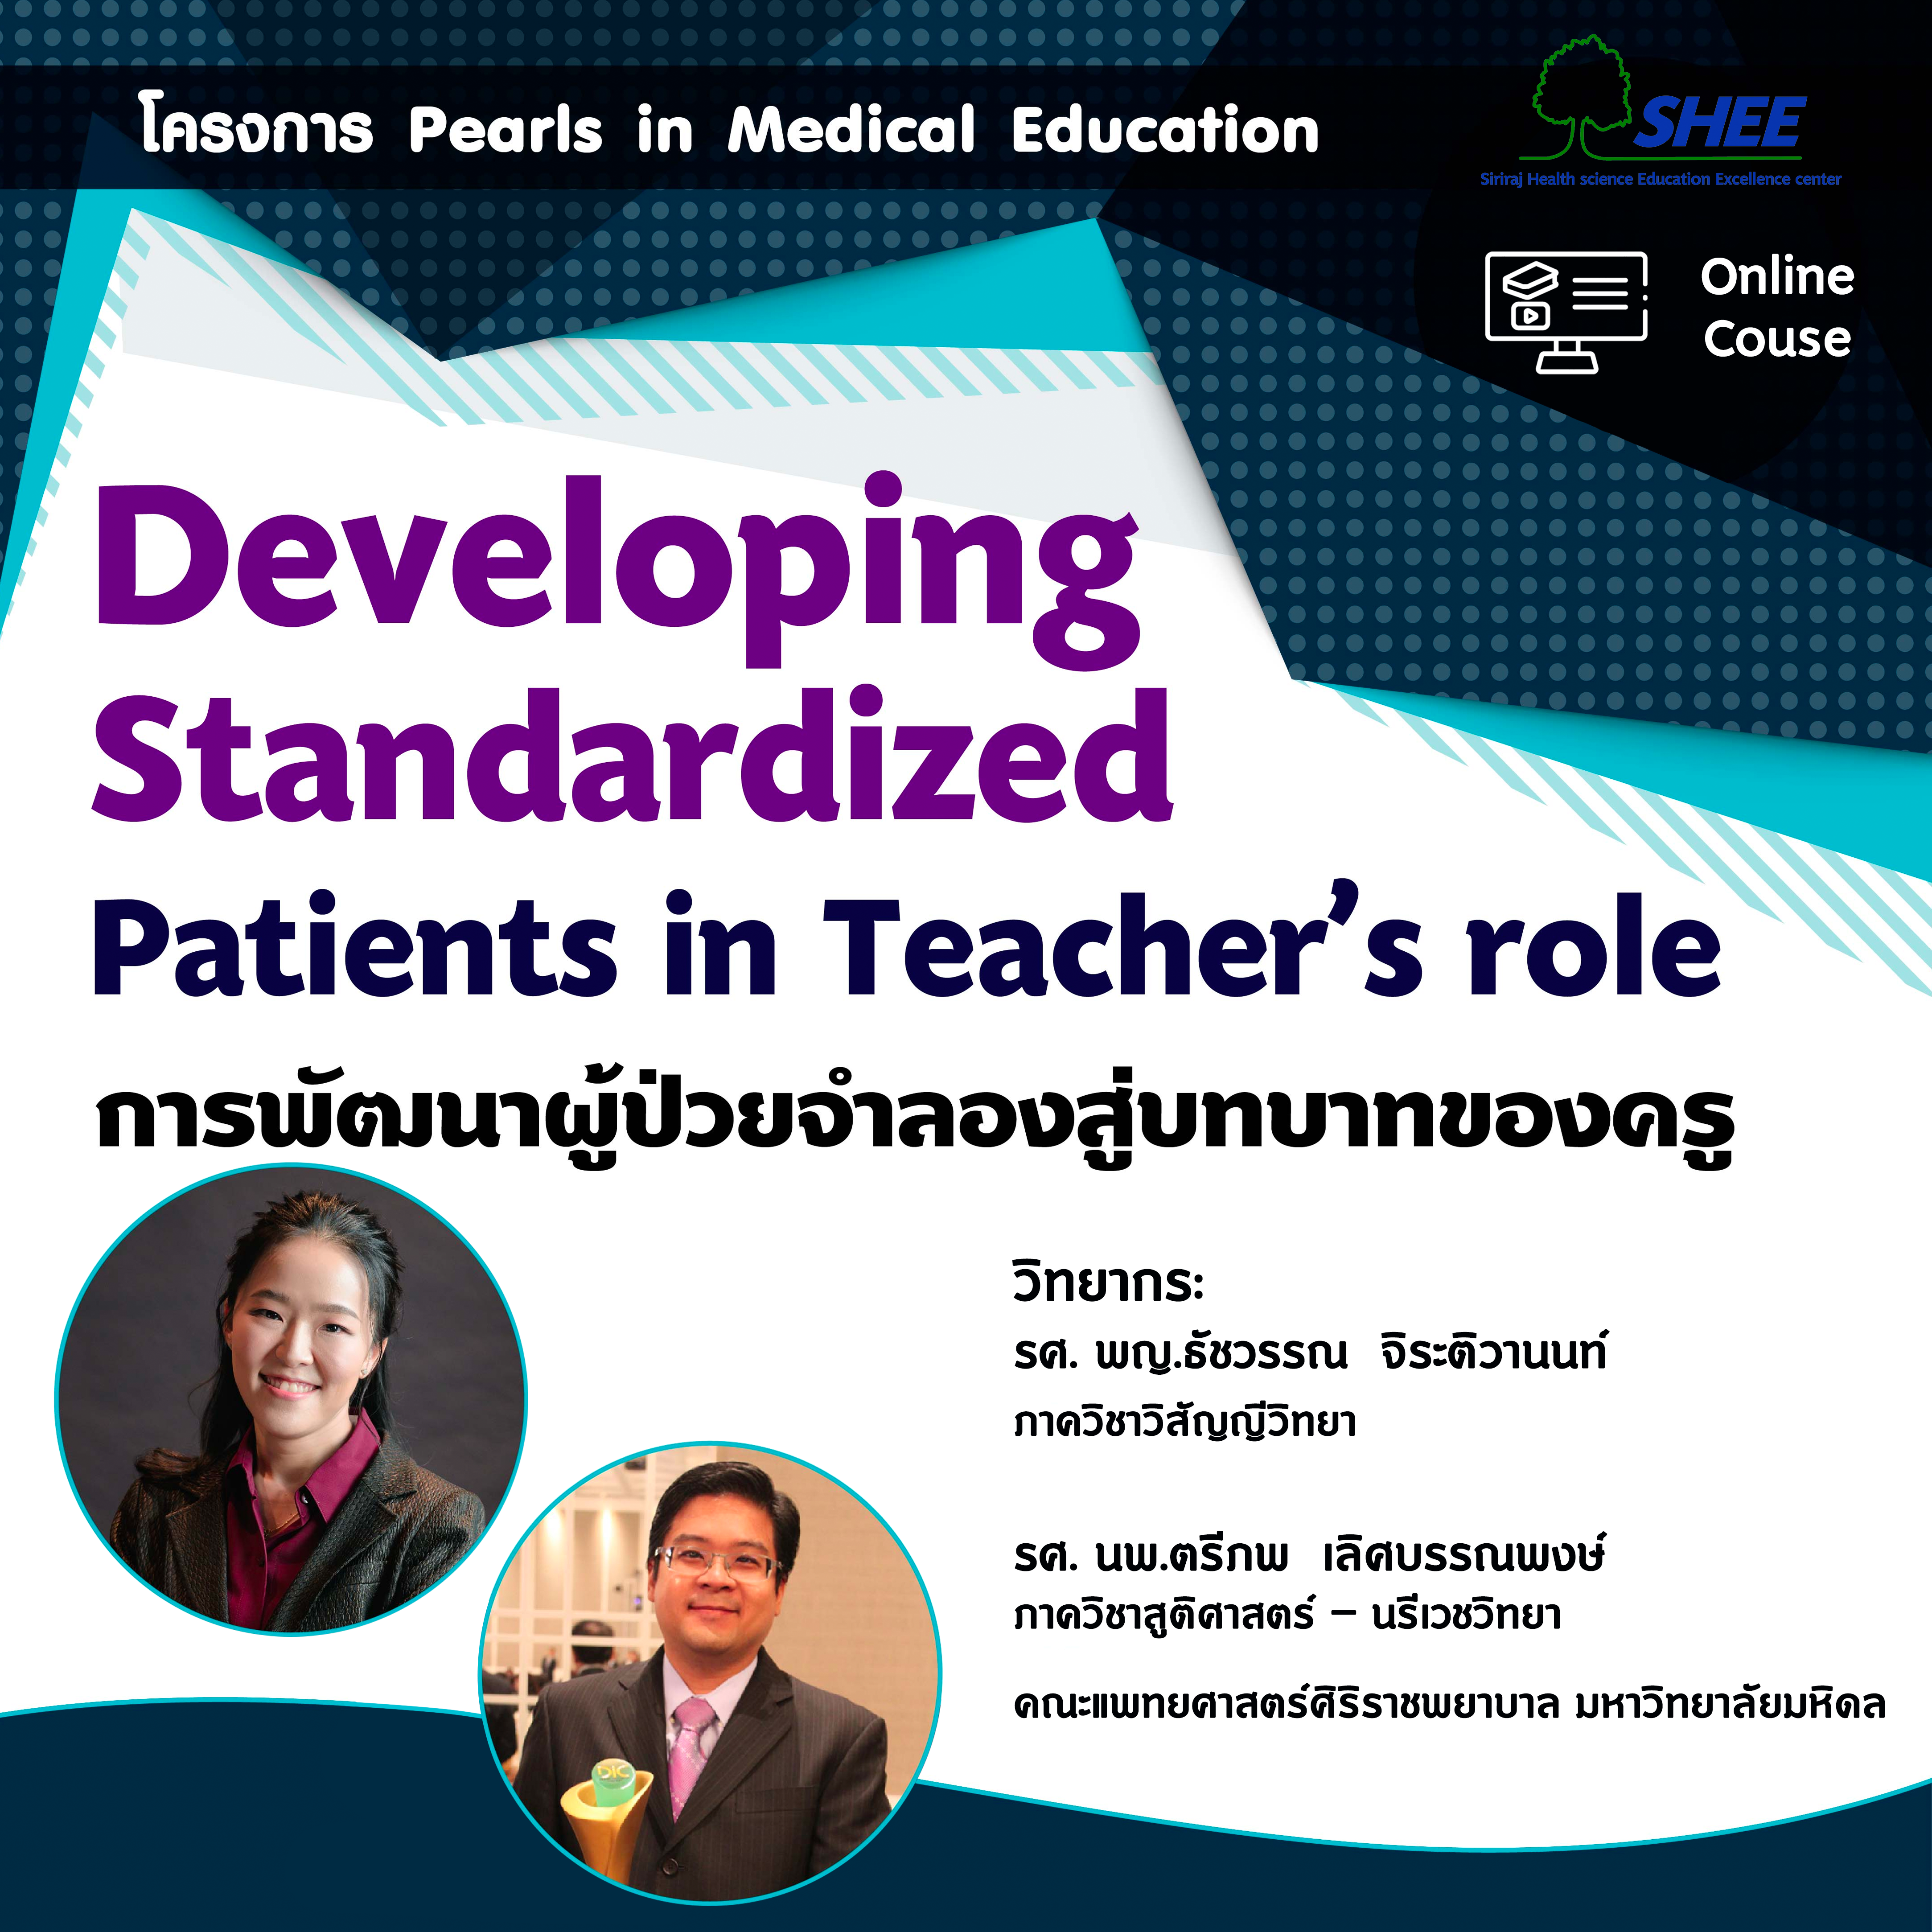 Developing standardized patients in teacher’s role การพัฒนาผู้ป่วยจำลองสู่บทบาทของครู